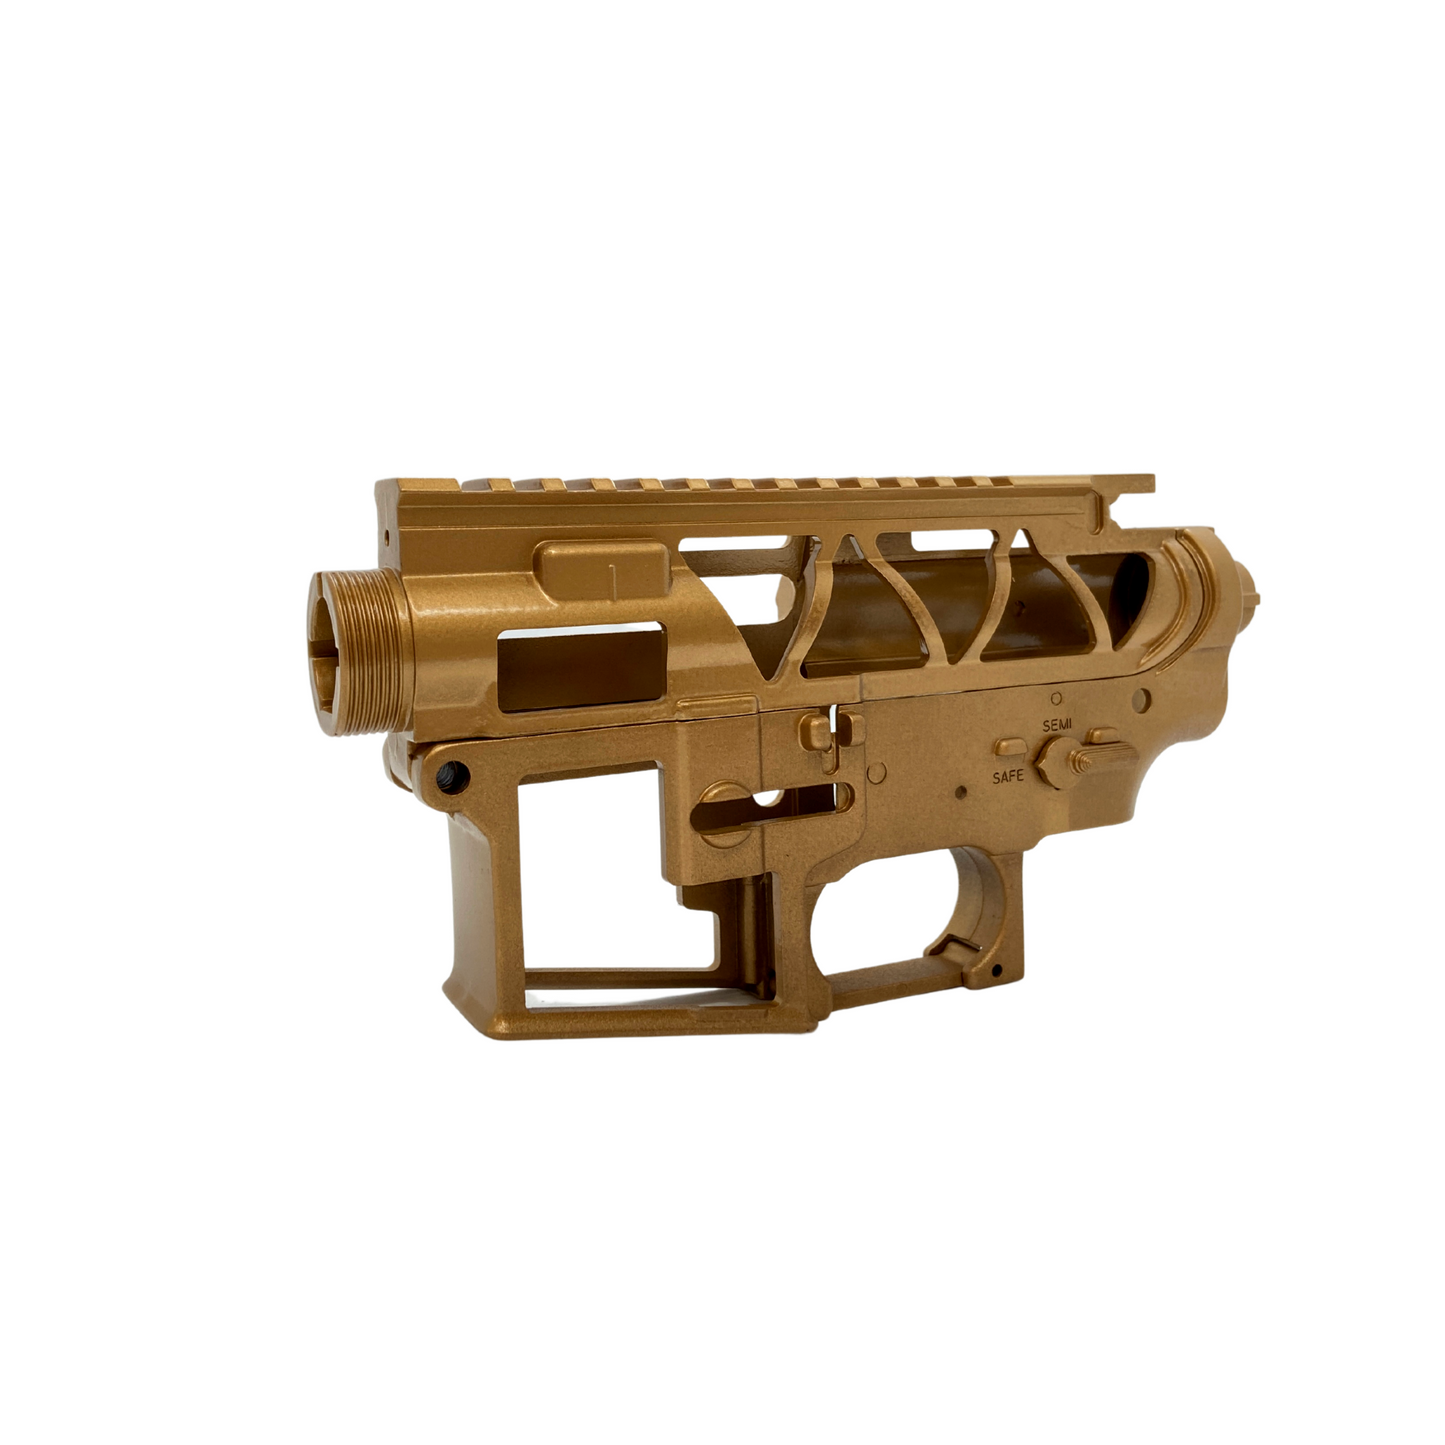 Custom Painted CNC V2 Receiver "Gold" for Gel Blaster